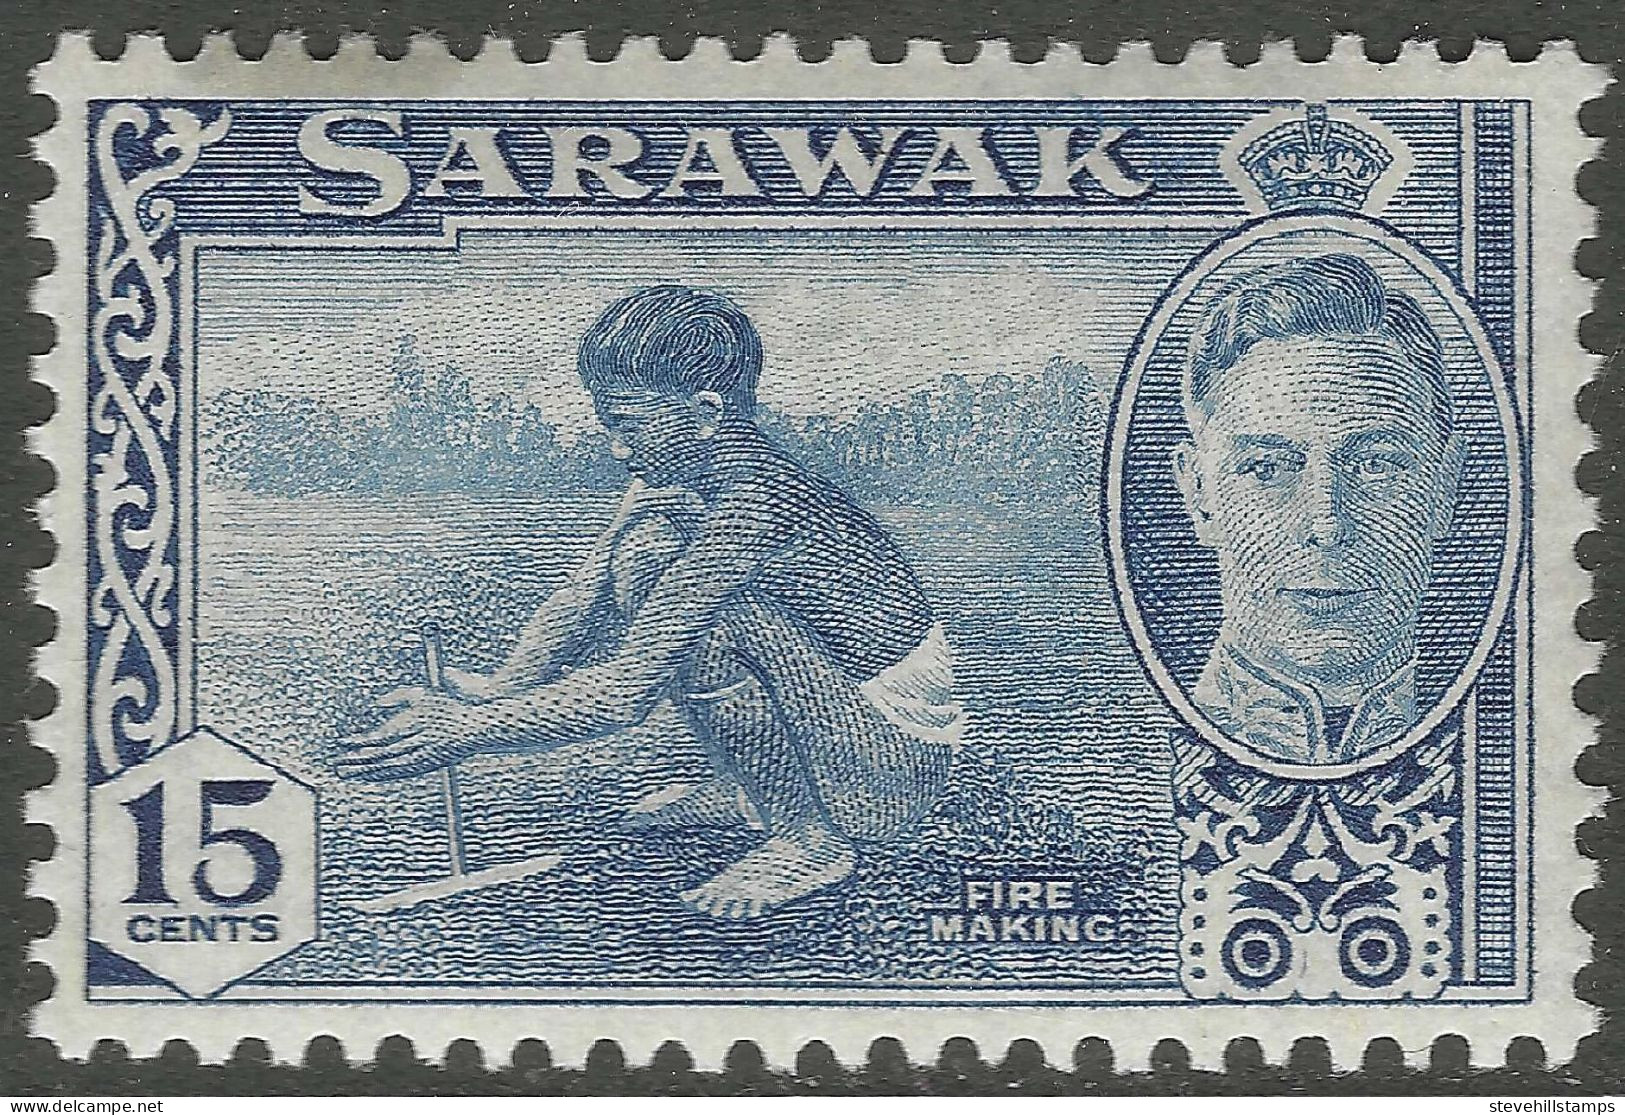 Sarawak. 1950 KGVI. 15c MH. SG 179 - Sarawak (...-1963)